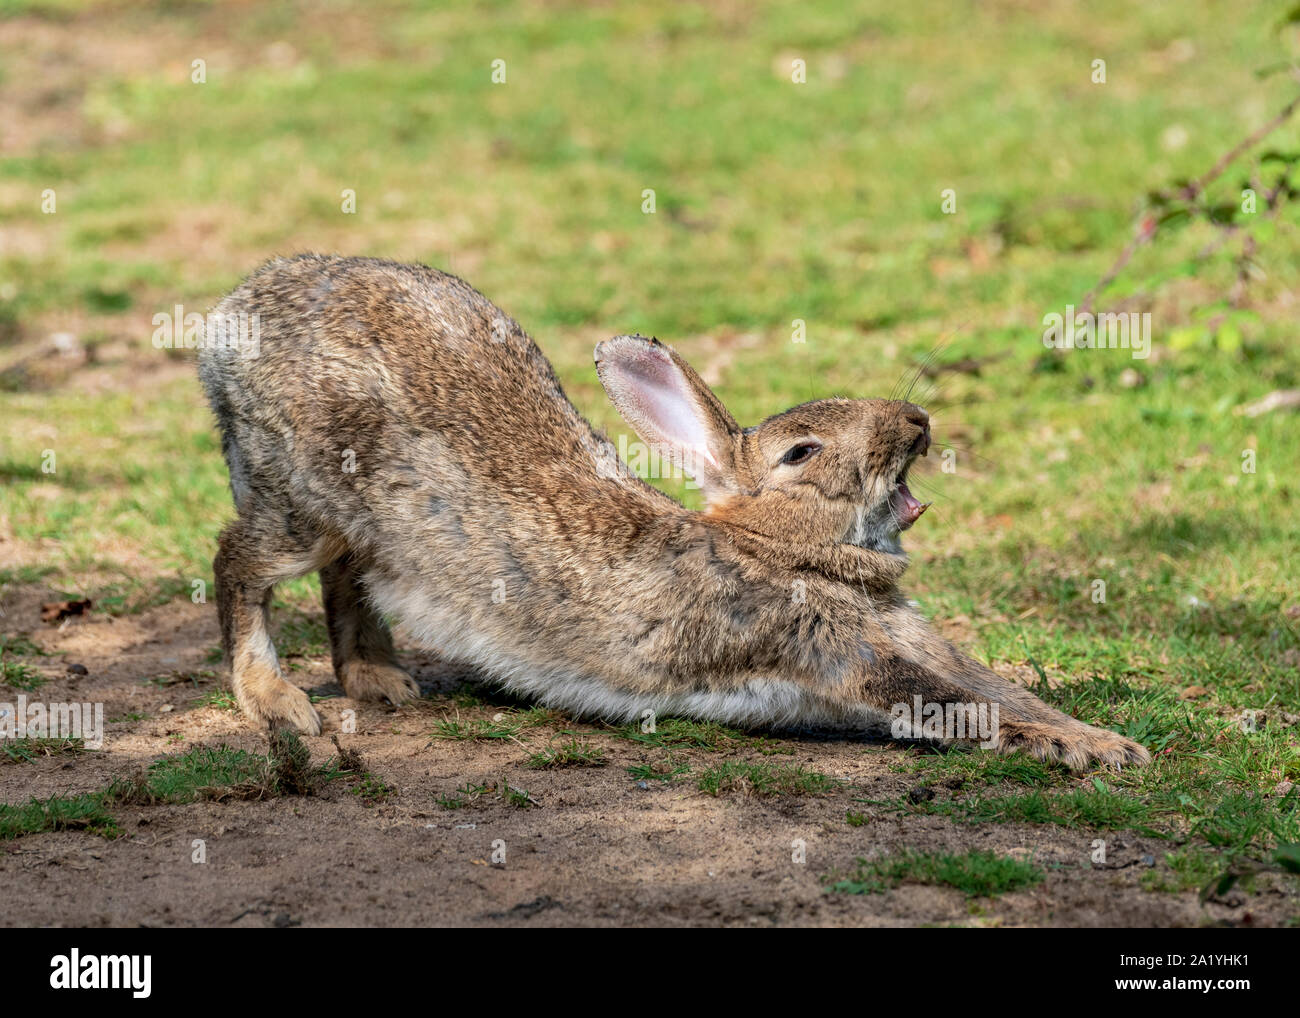 Wild rabbit stretching and yawning Stock Photo